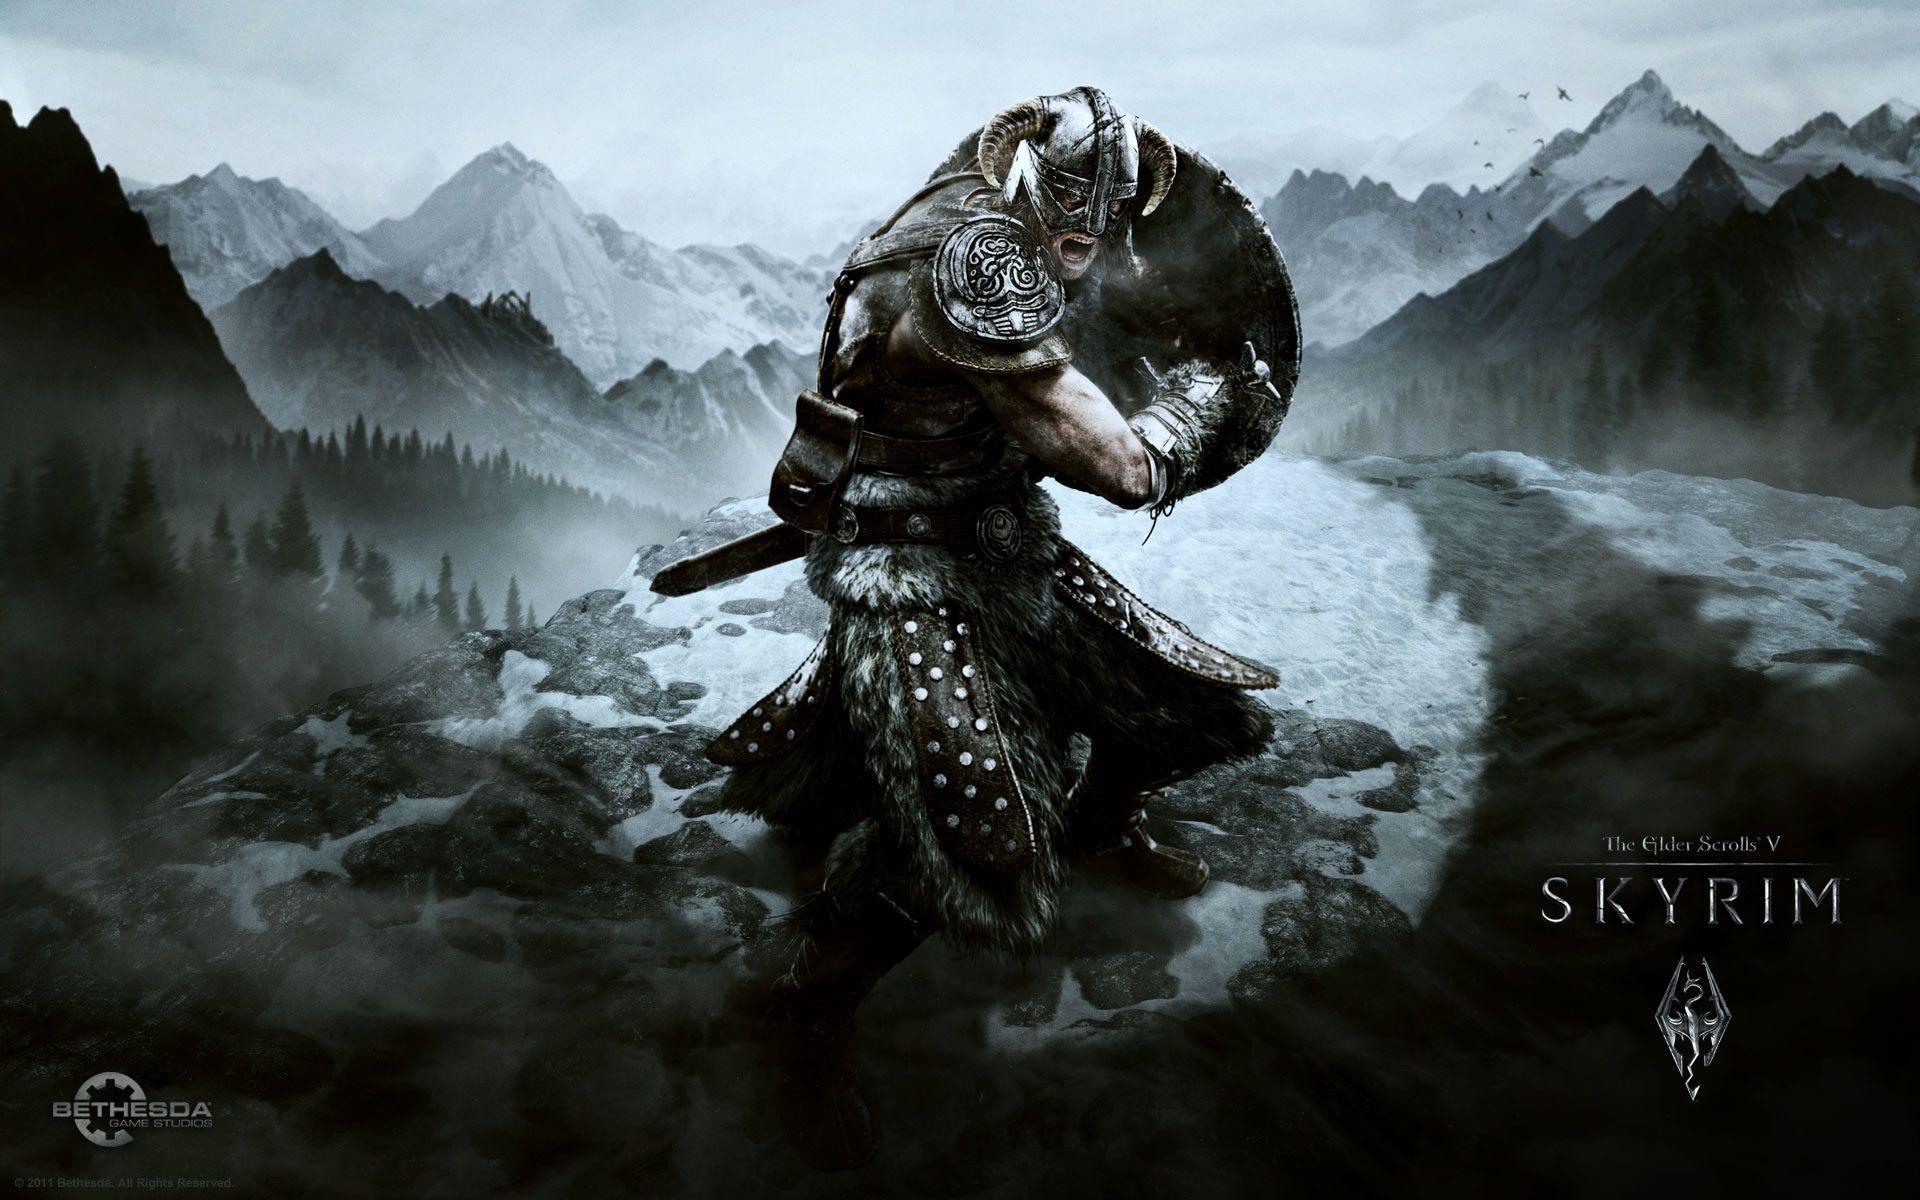 The Elder Scrolls V: Skyrim. PC Games Archive